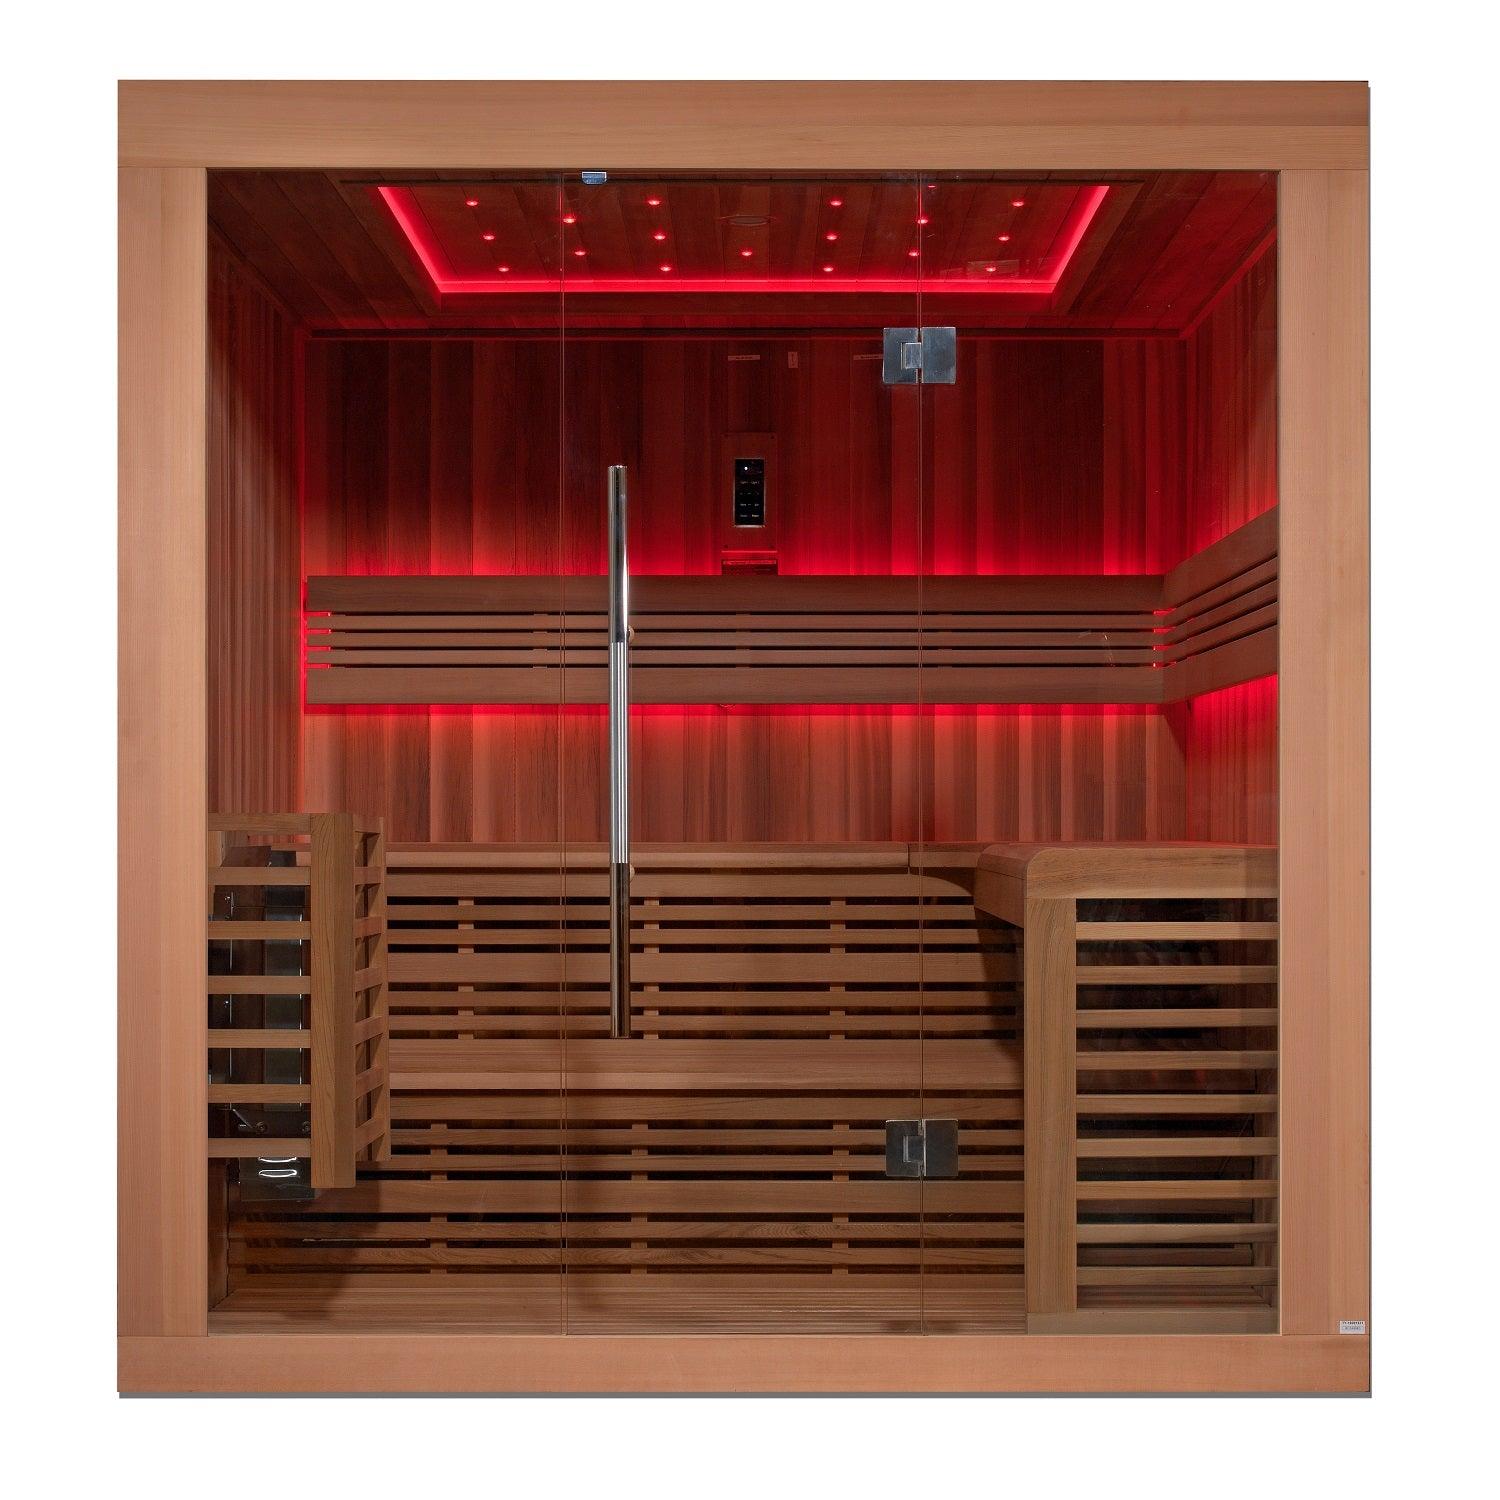 Golden Designs Osla Edition 6 Person Traditional Steam Sauna - Canadian Red Cedar - Sea & Stone Bath